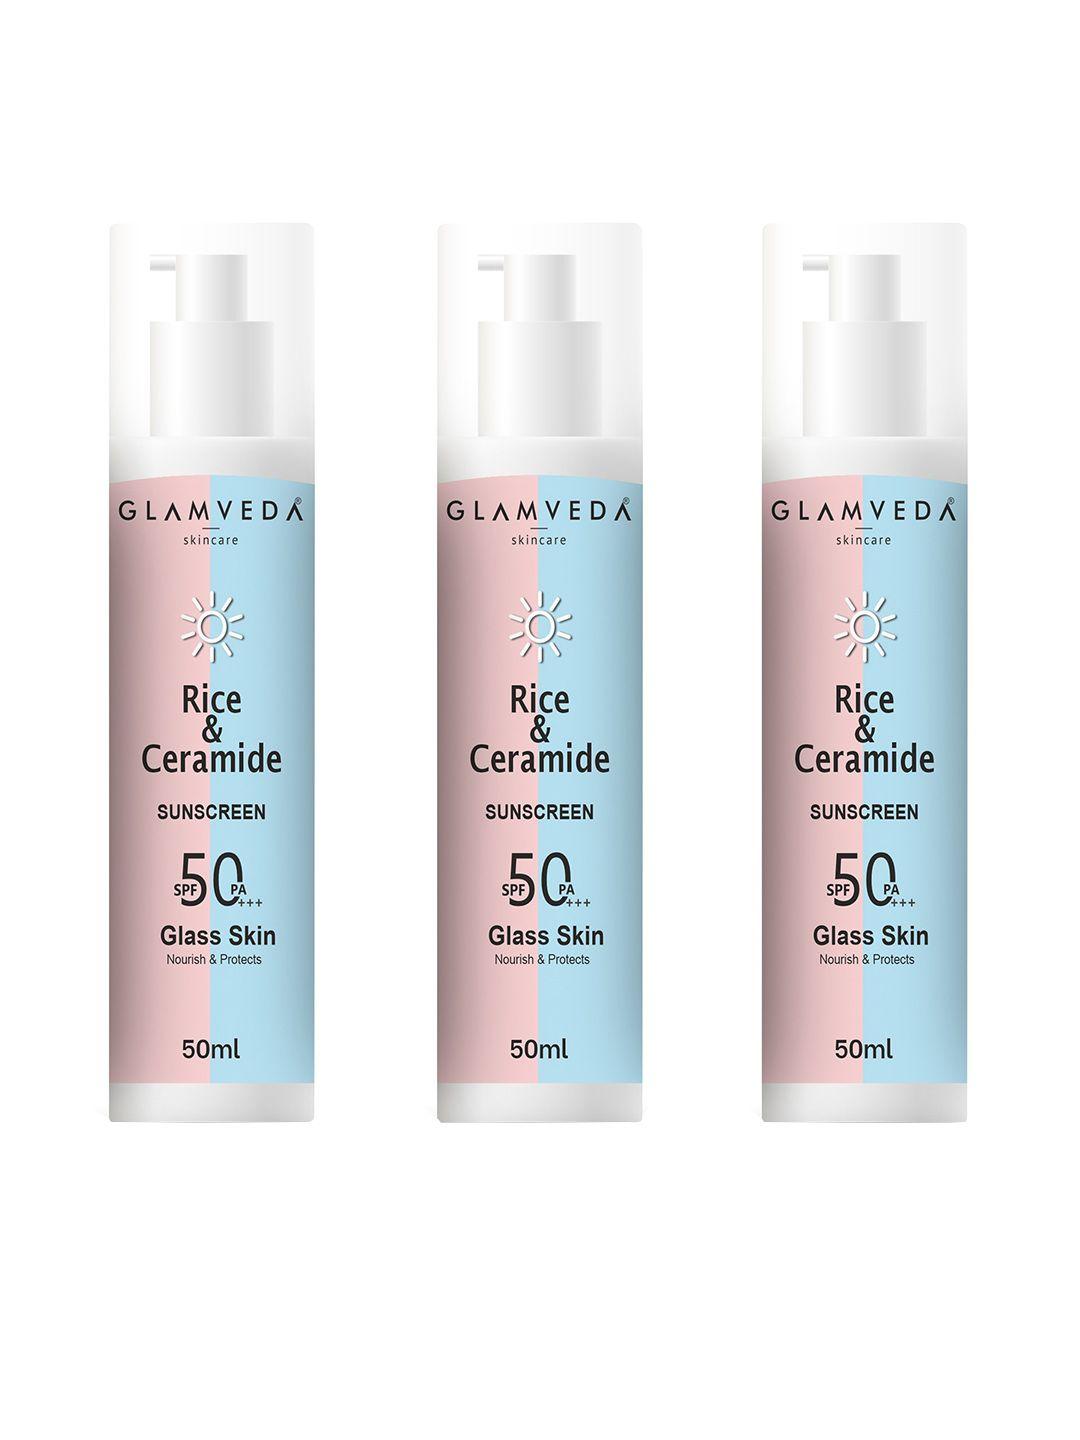 glamveda pack of 3 glass skin rice & ceramide spf 50 pa+++ sunscreen - 50ml each